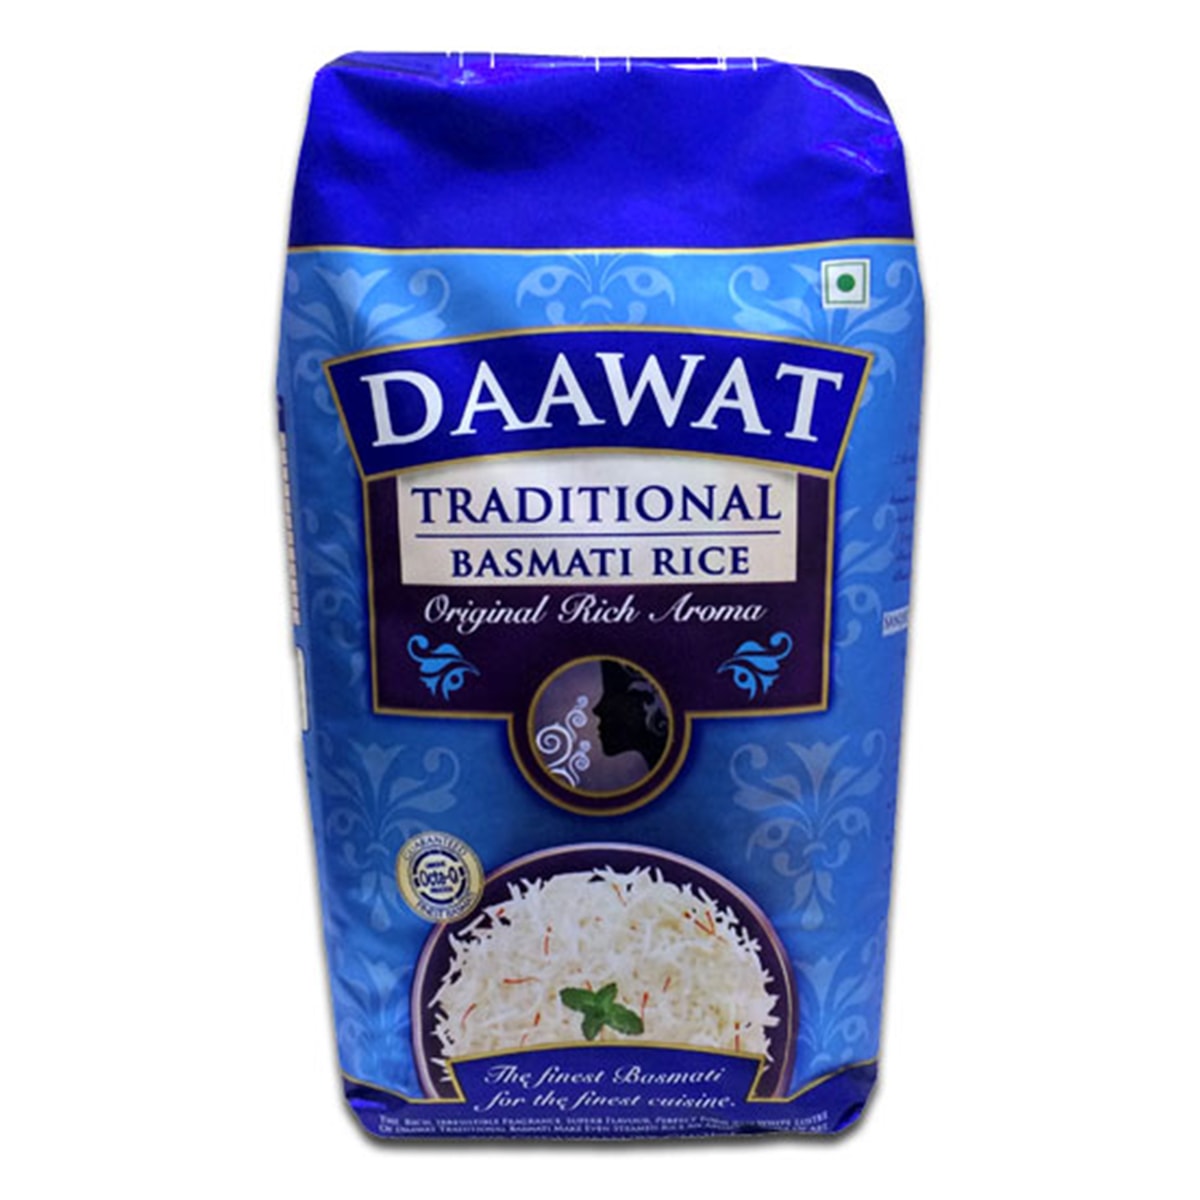 Buy Daawat Traditional Basmati Rice - 1 kg